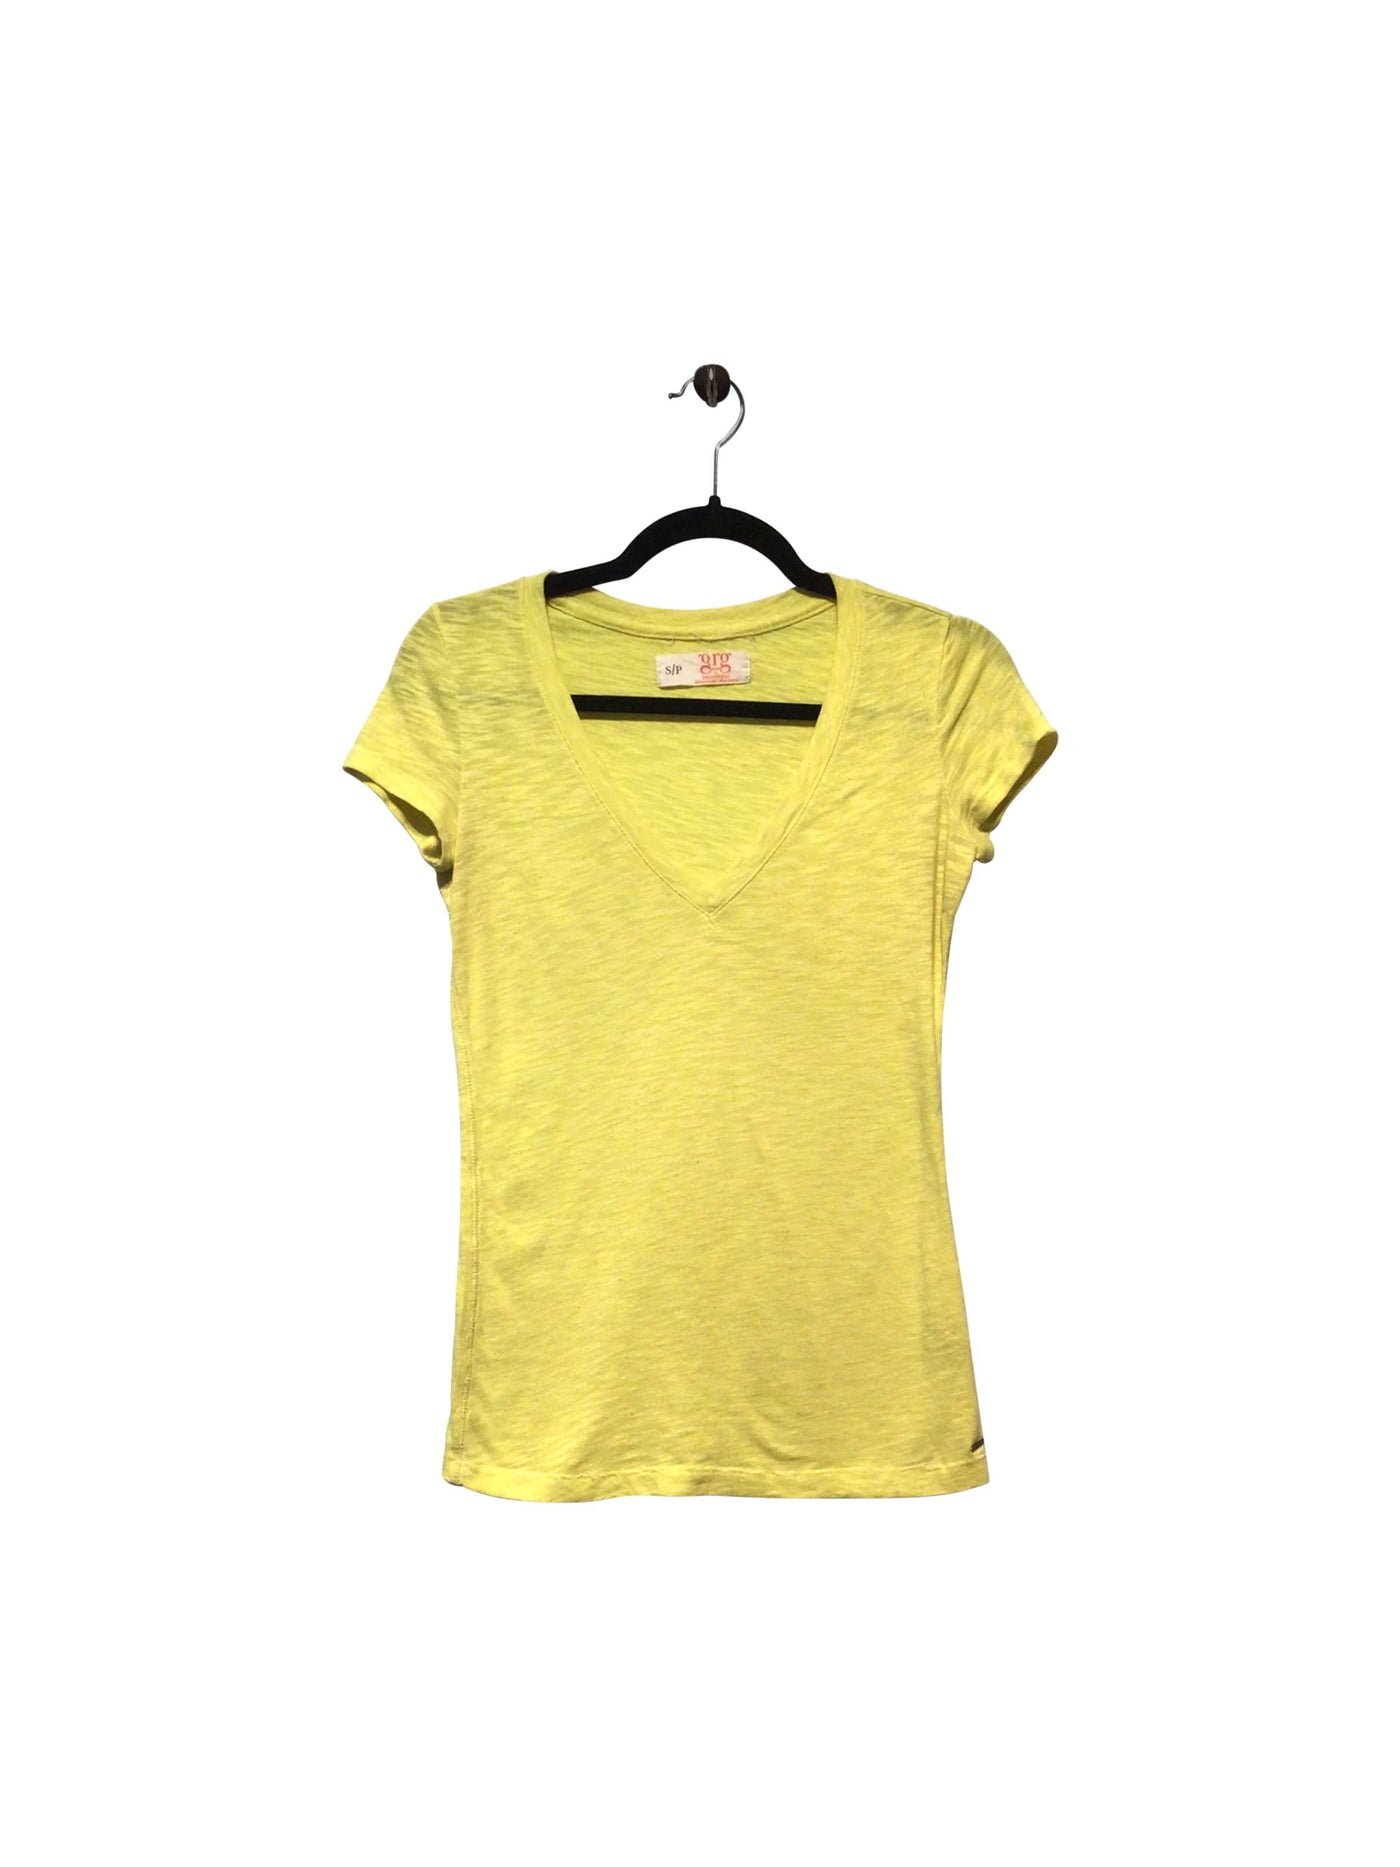 GRG DENIM Regular fit T-shirt in Yellow  -  S  7.99 Koop